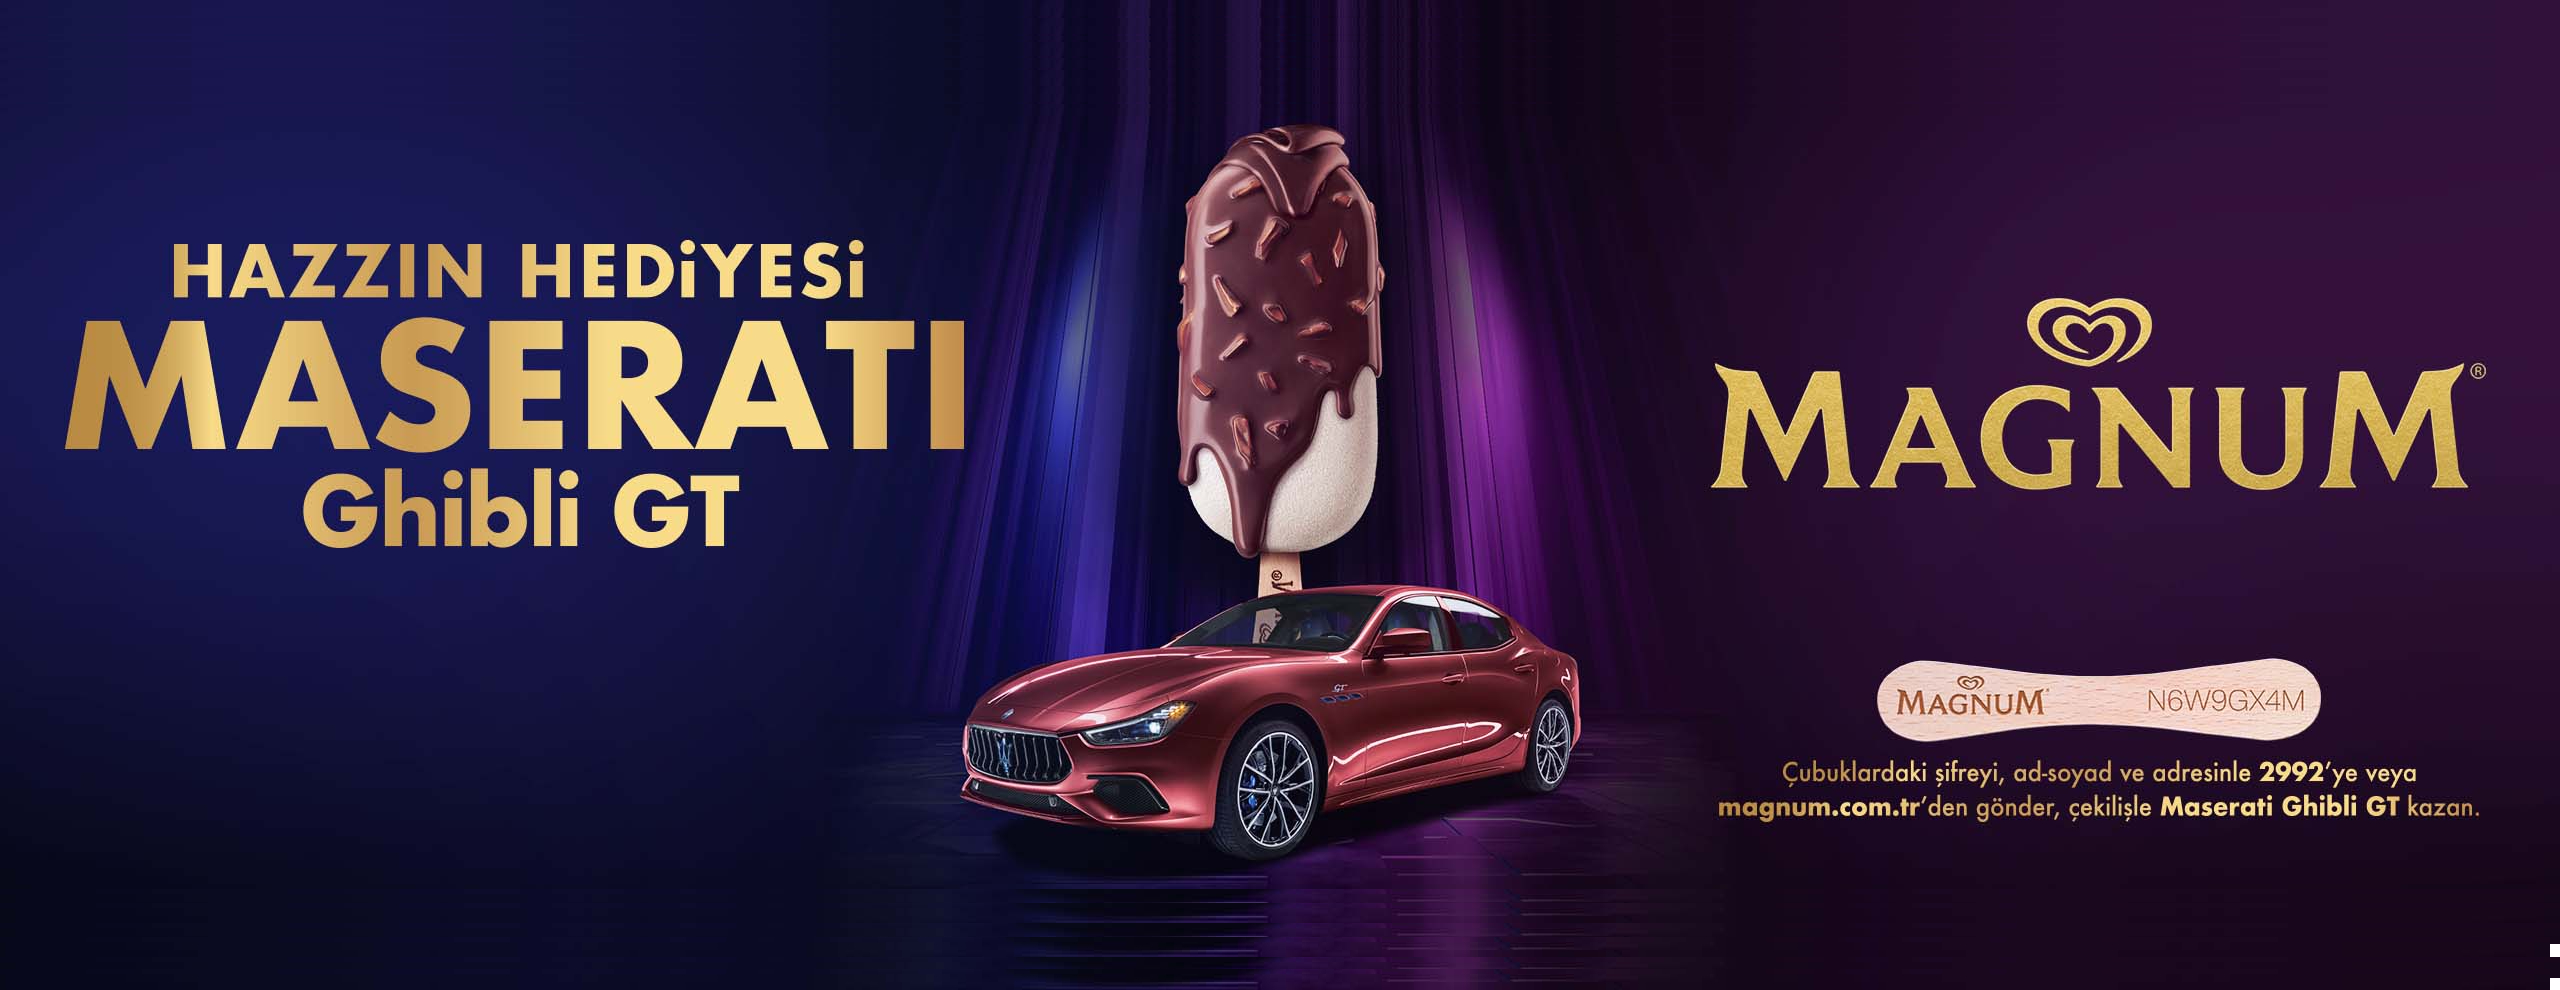 Maserati Ghibli Promo